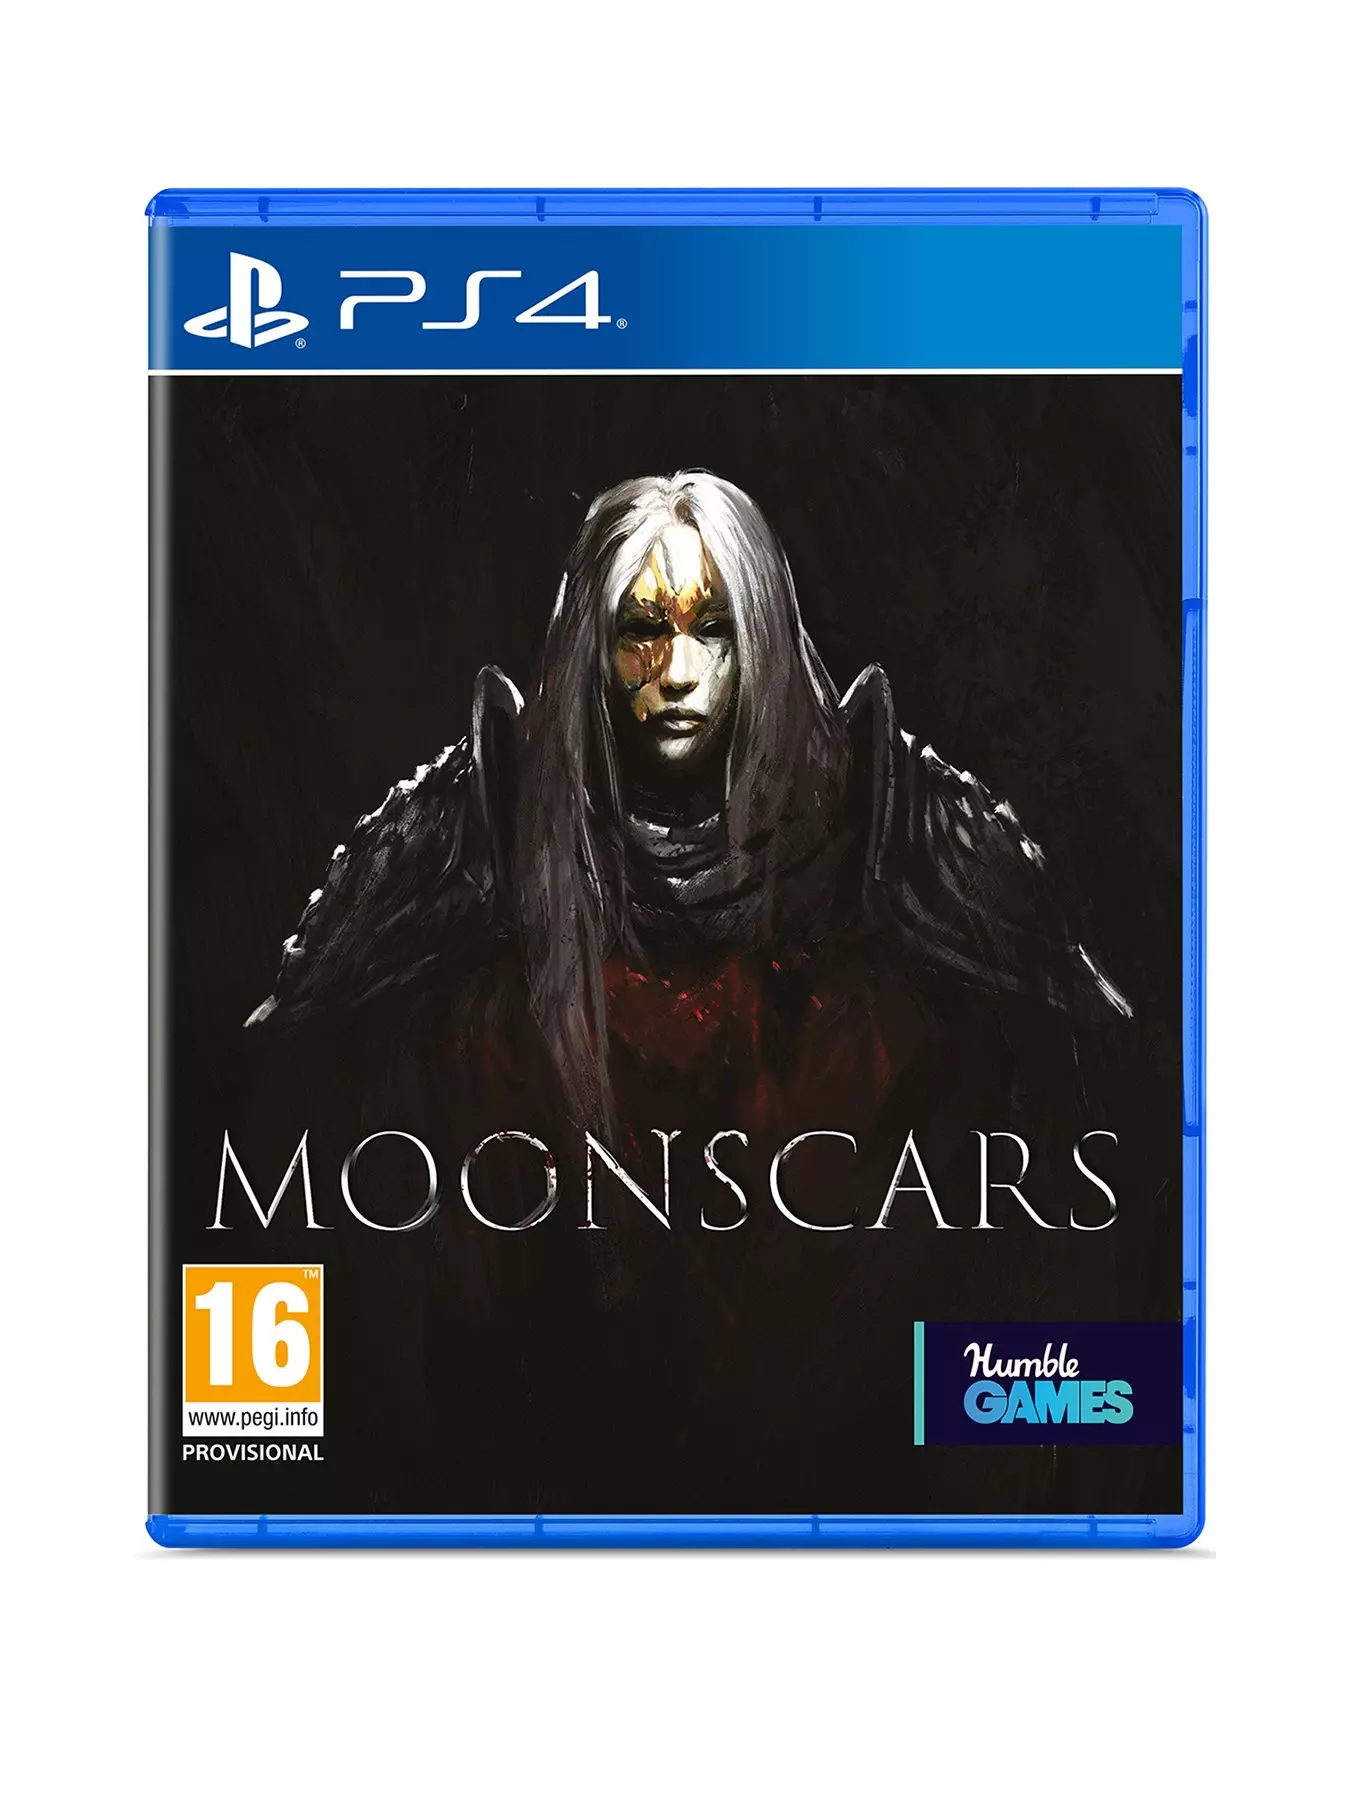 Moonscars - Metacritic